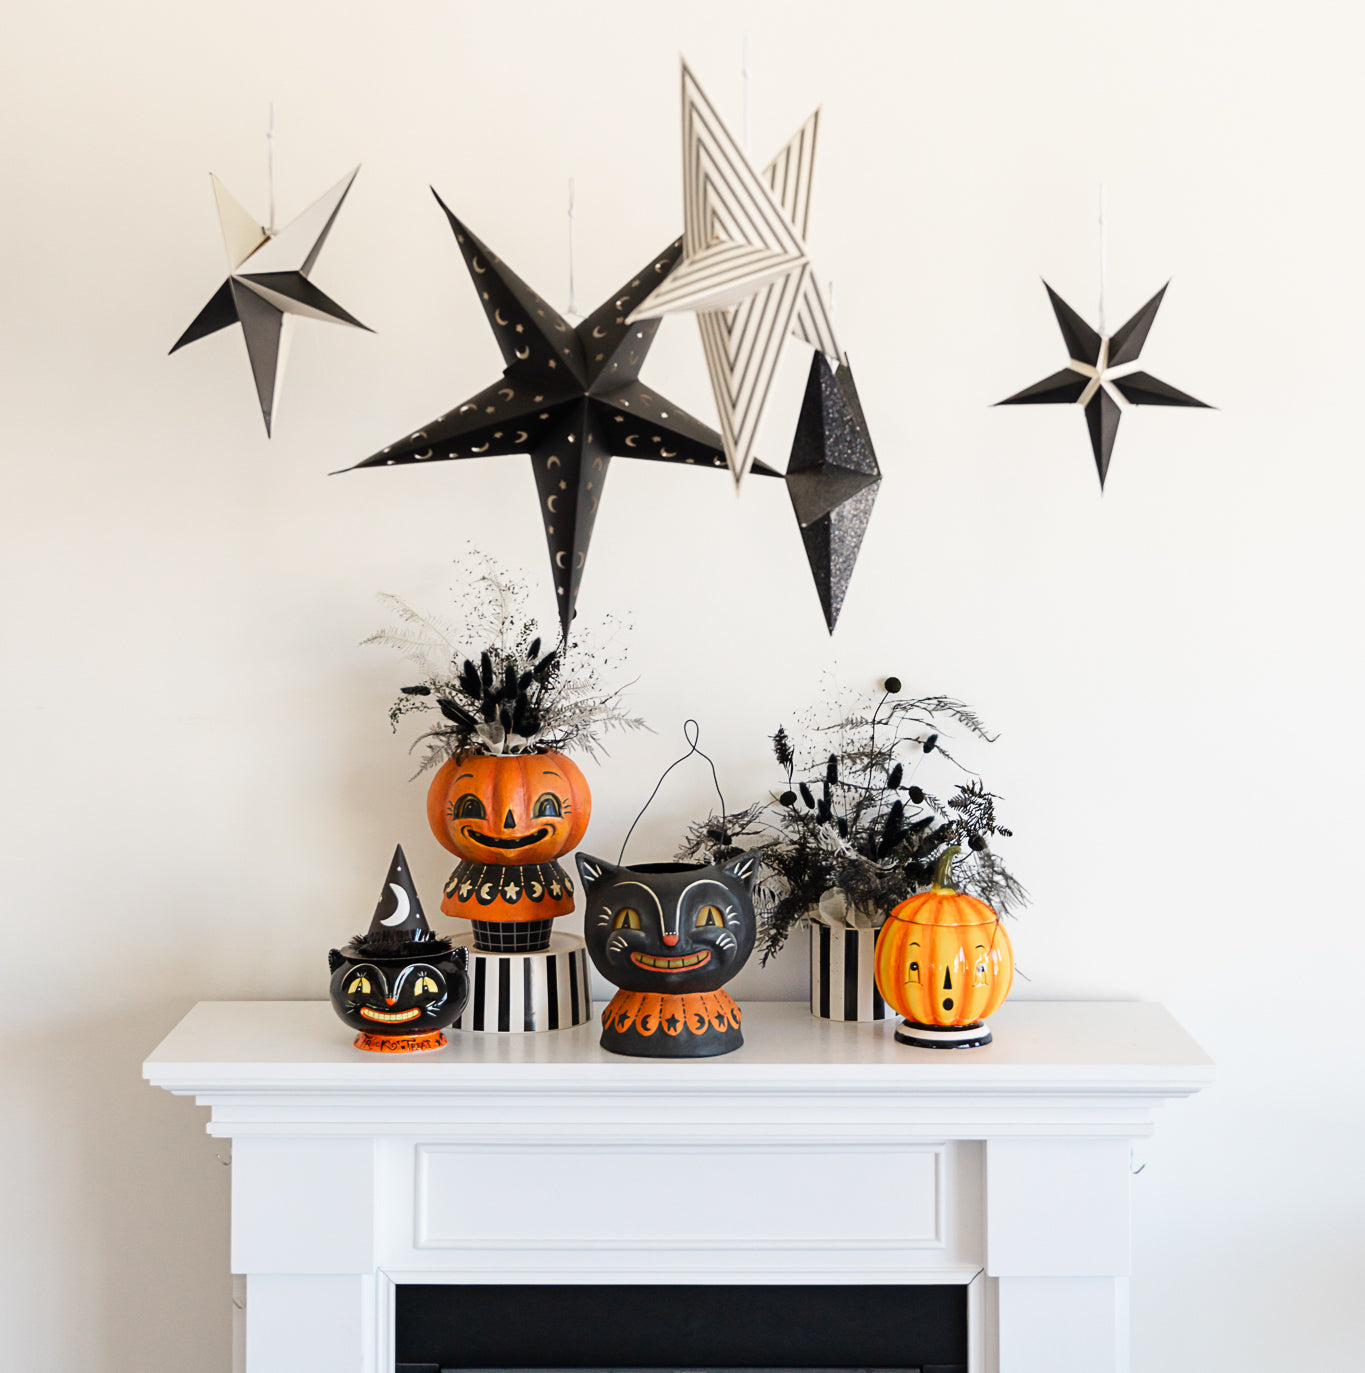 Vintage Halloween mantle display with Johanna Parker Halloween decorations